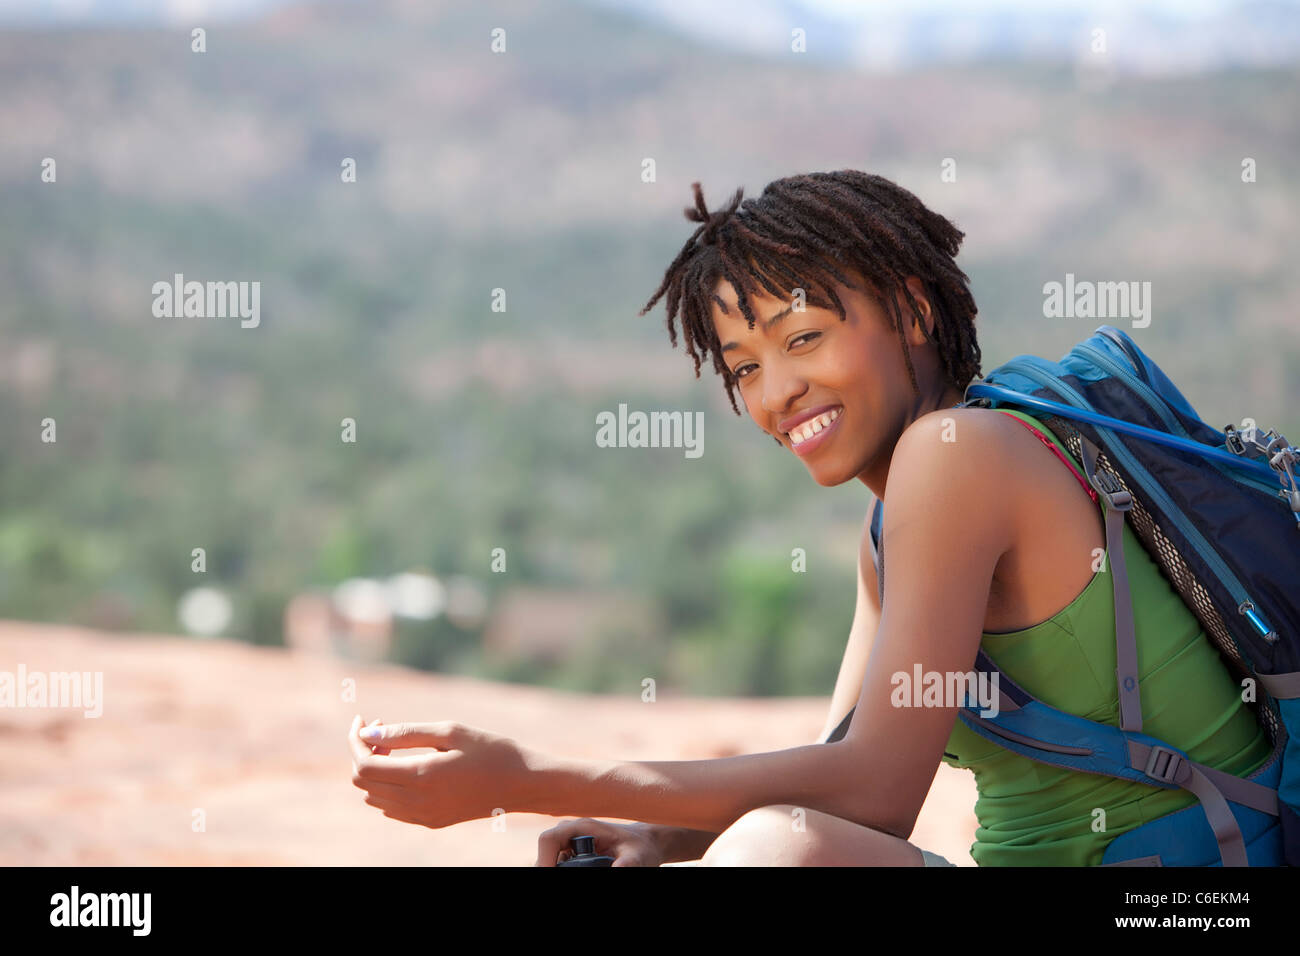 USA, Arizona, Sedona, Portrait of smiling female hiker Stock Photo